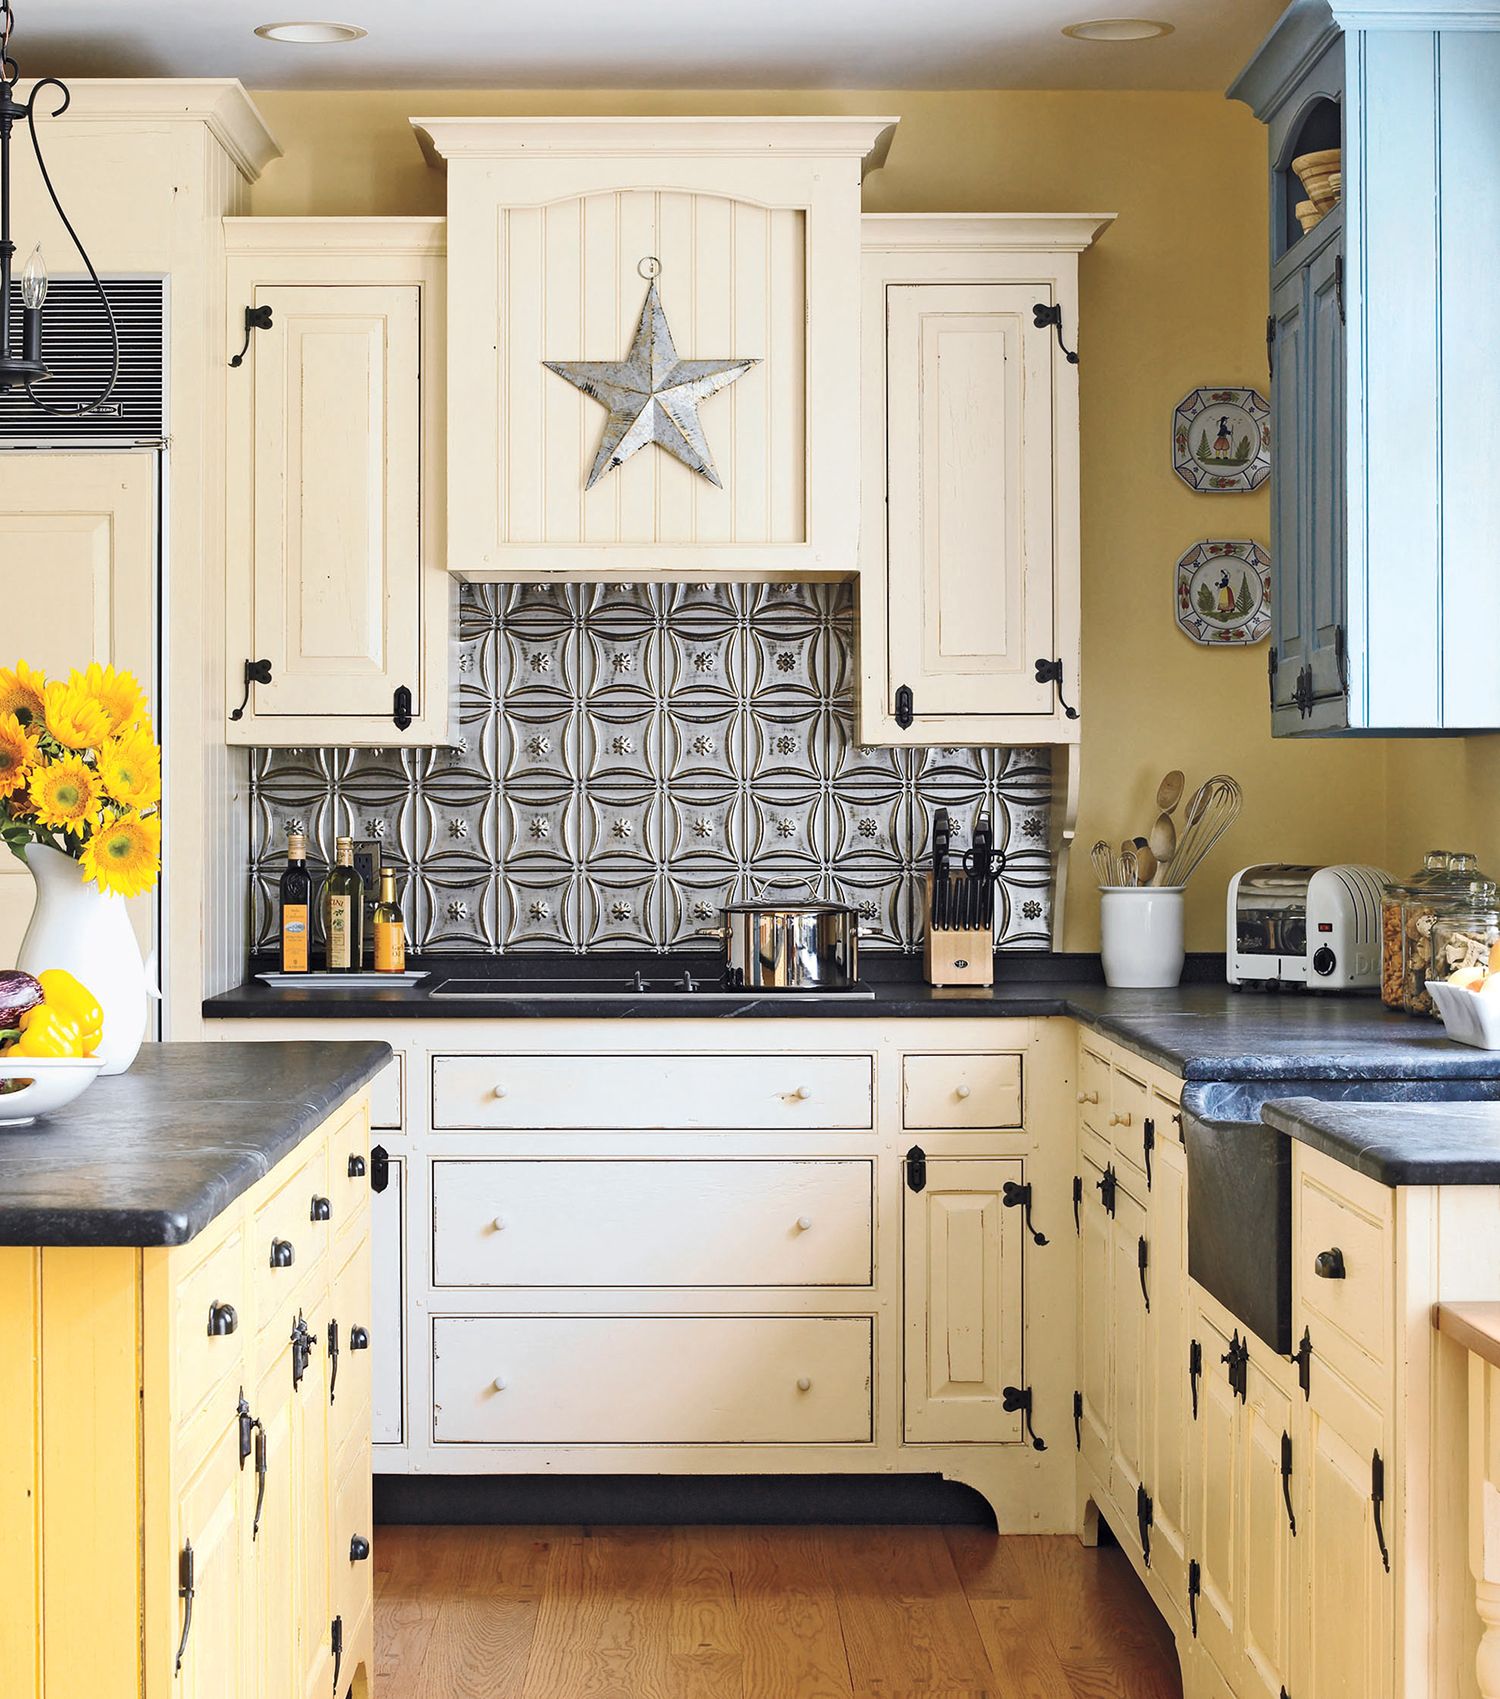 20 Chic Kitchen Backsplash Ideas   Tile Designs for Kitchen ...